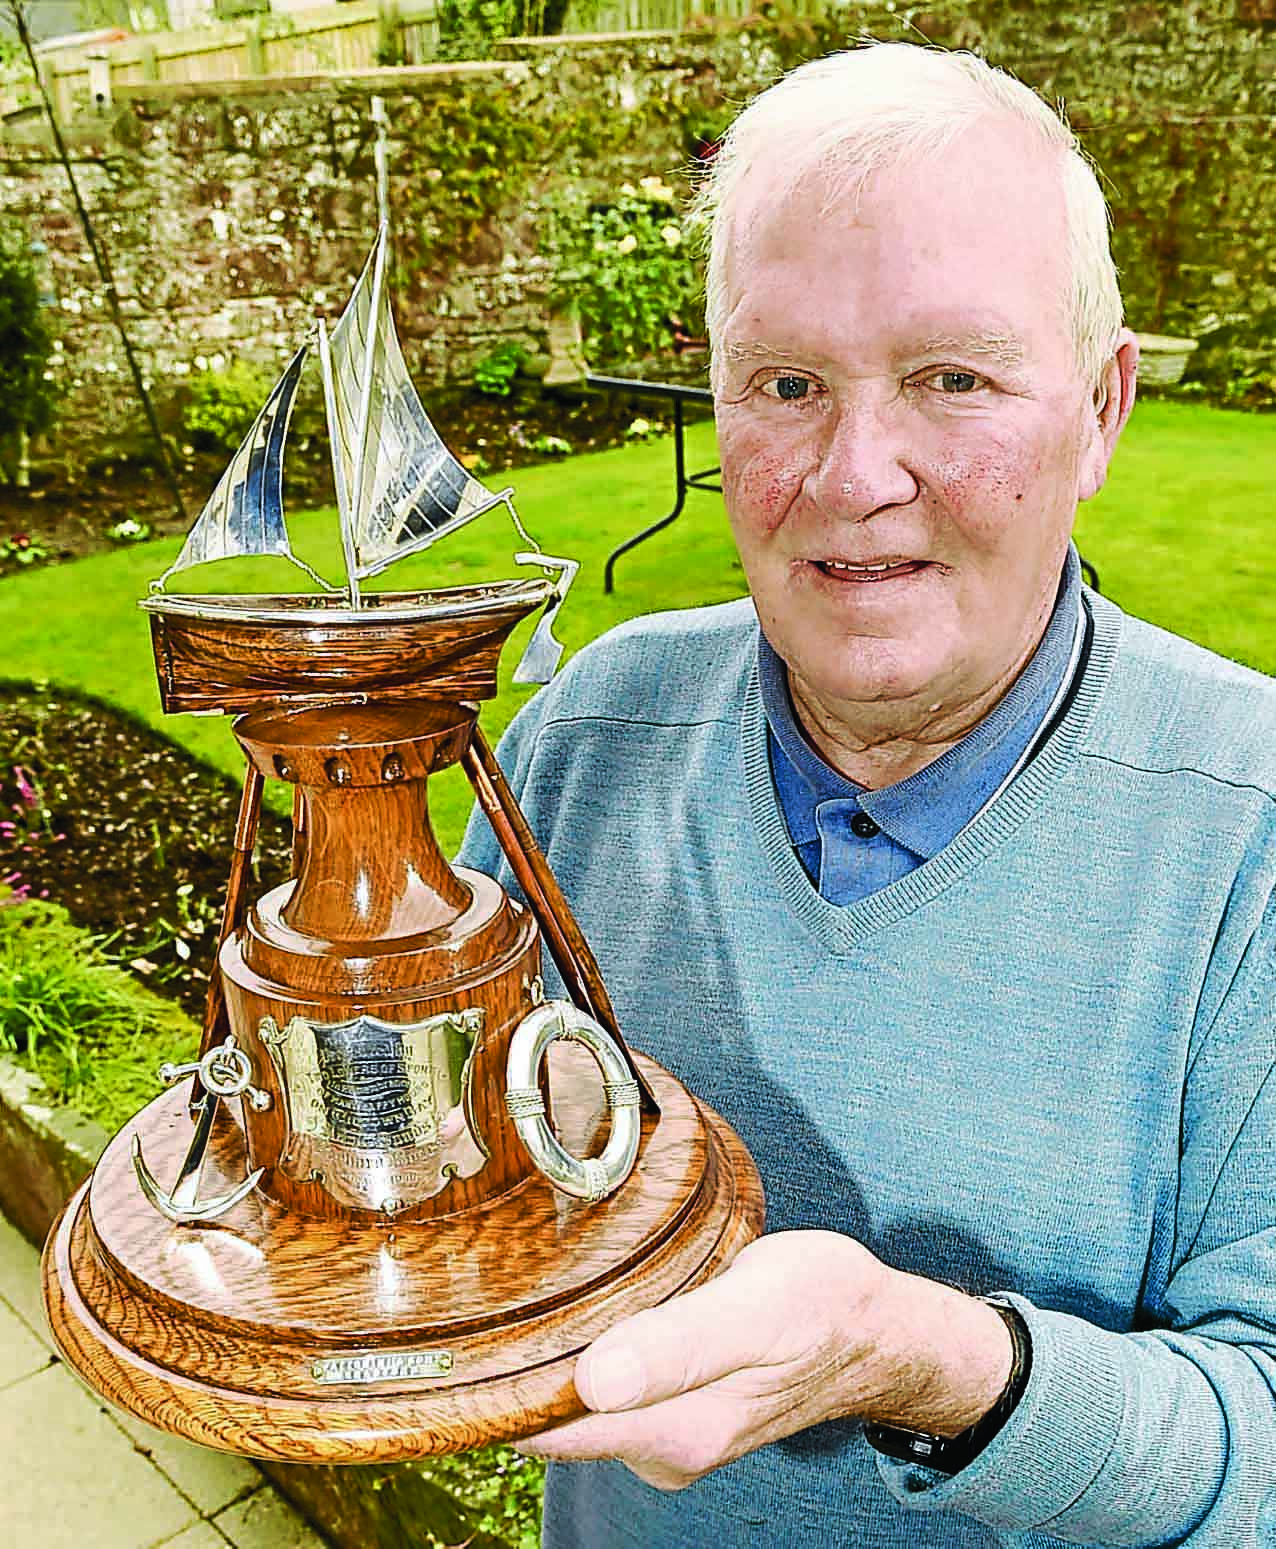 Grandad's trophy has prestigious links